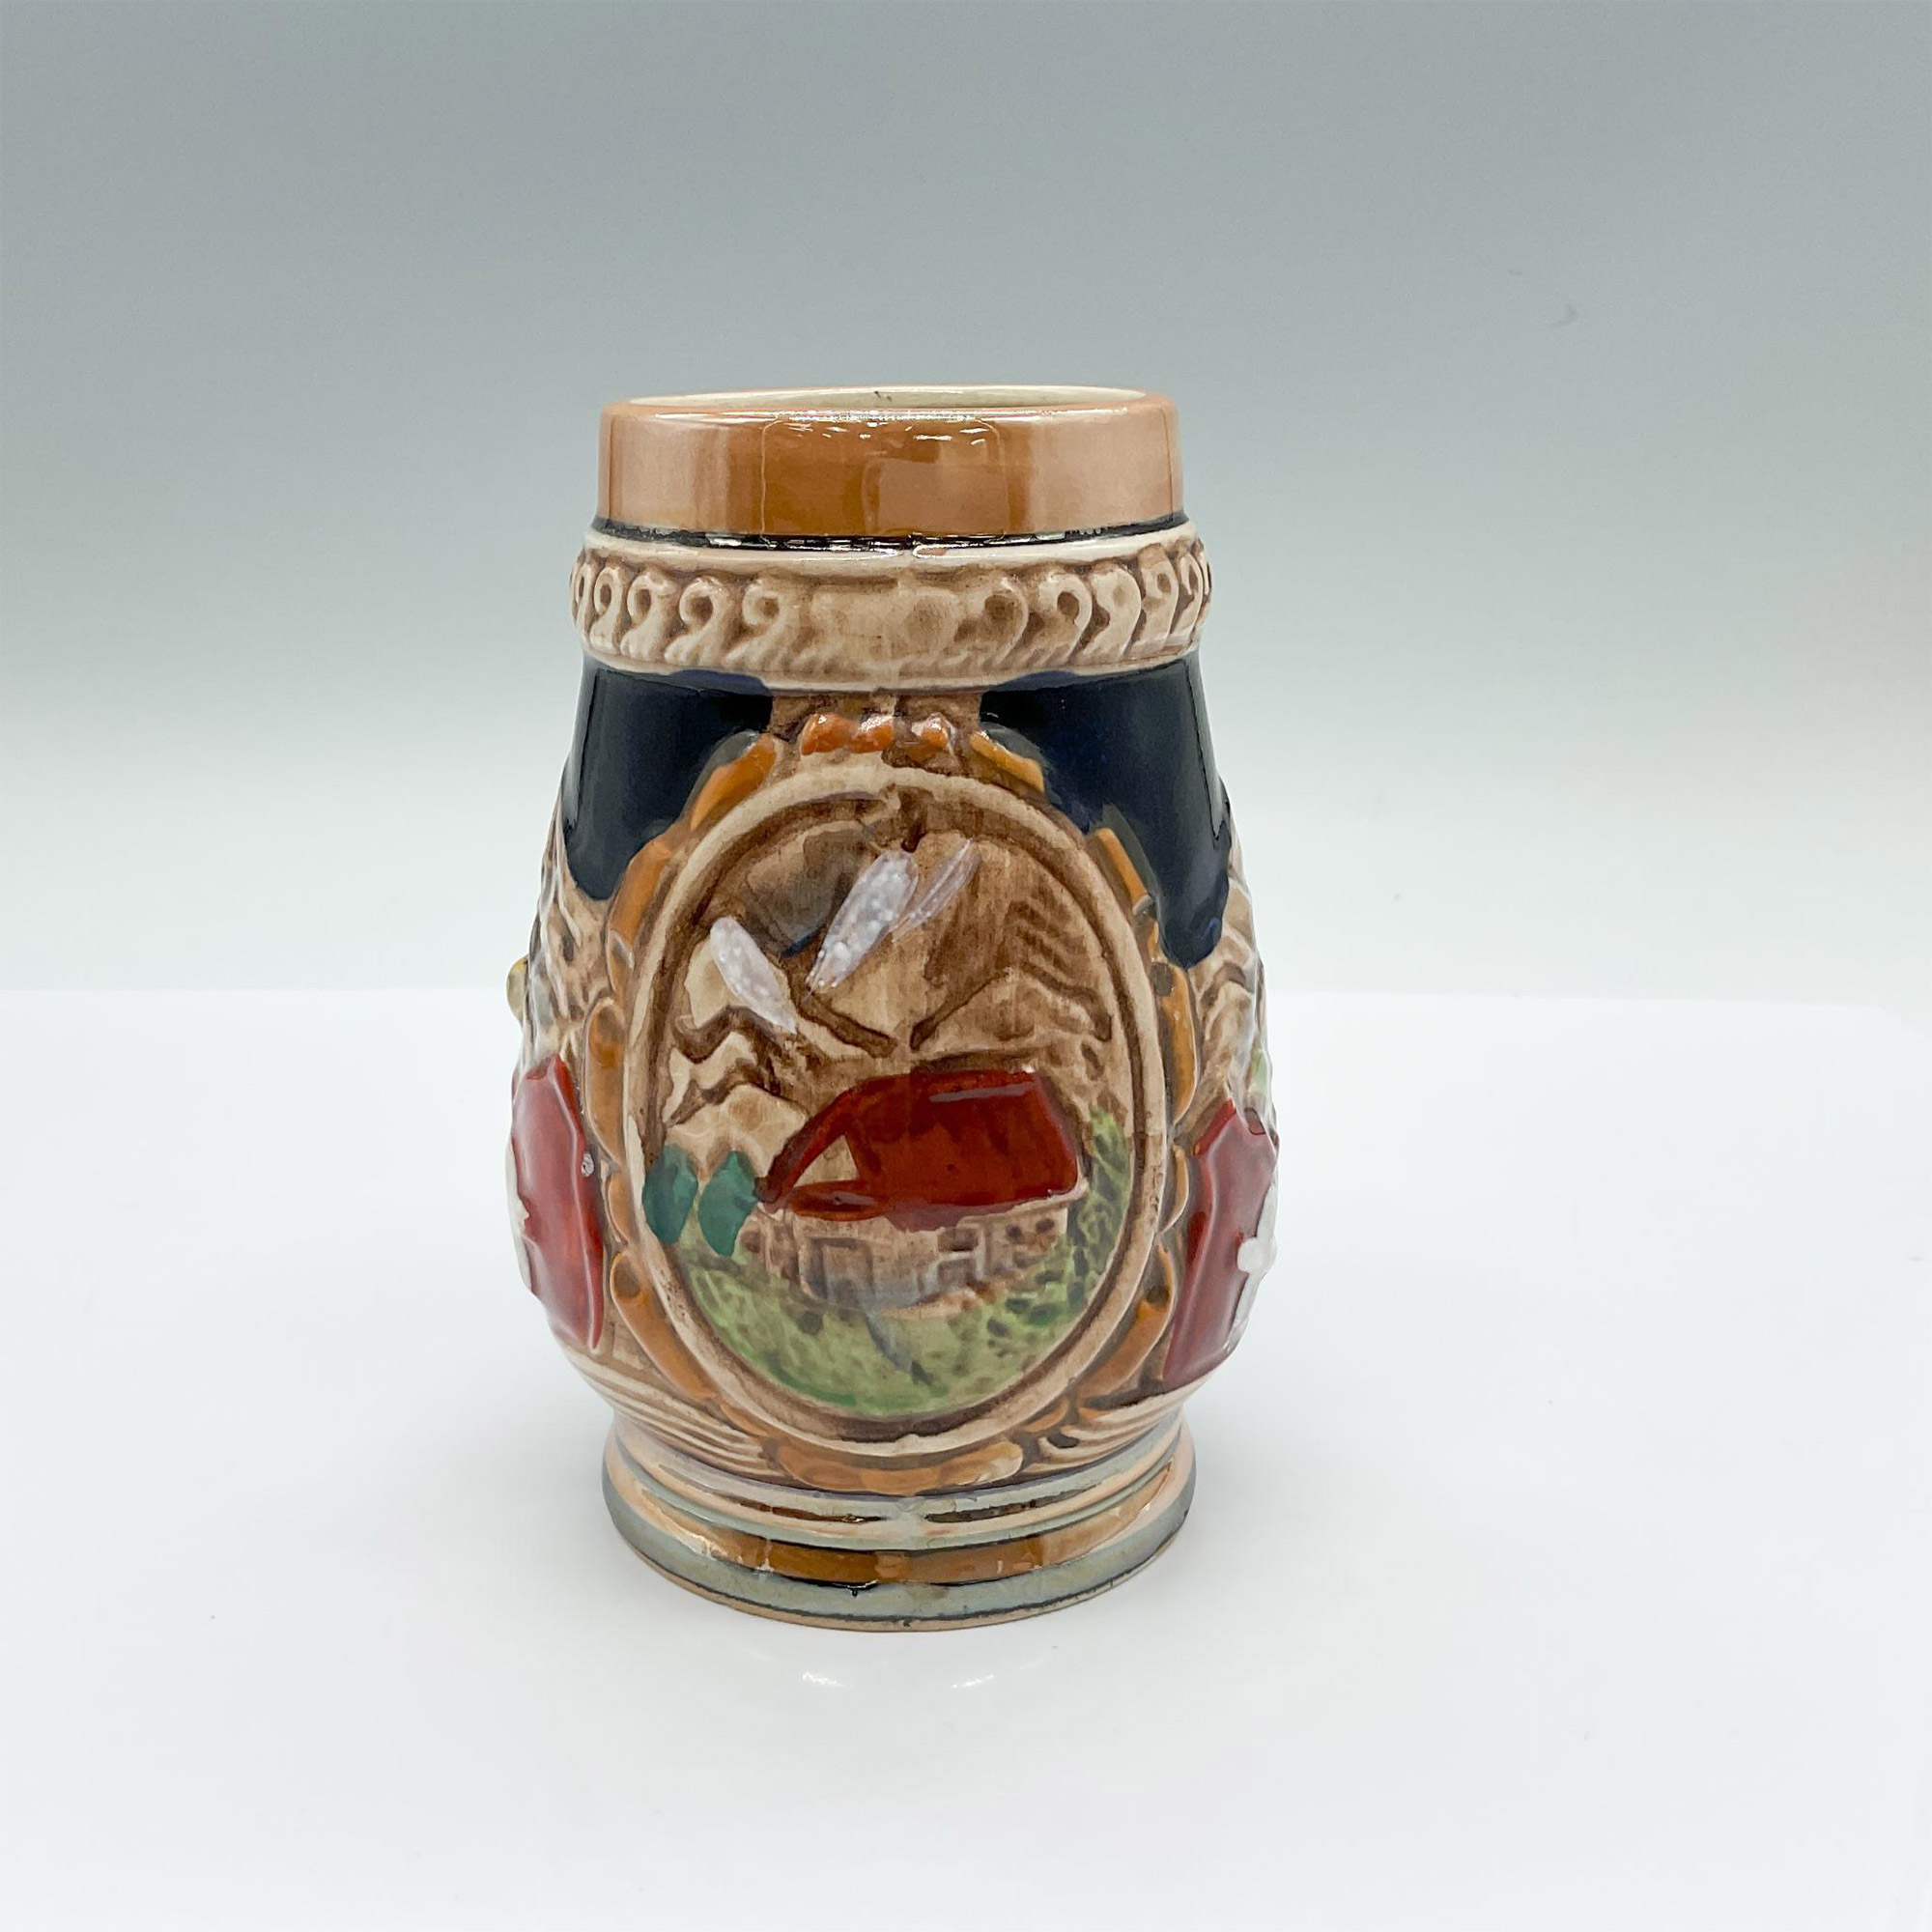 Vintage Switzerland Suisse Schweiz Ceramic Beer Mug - Image 3 of 4